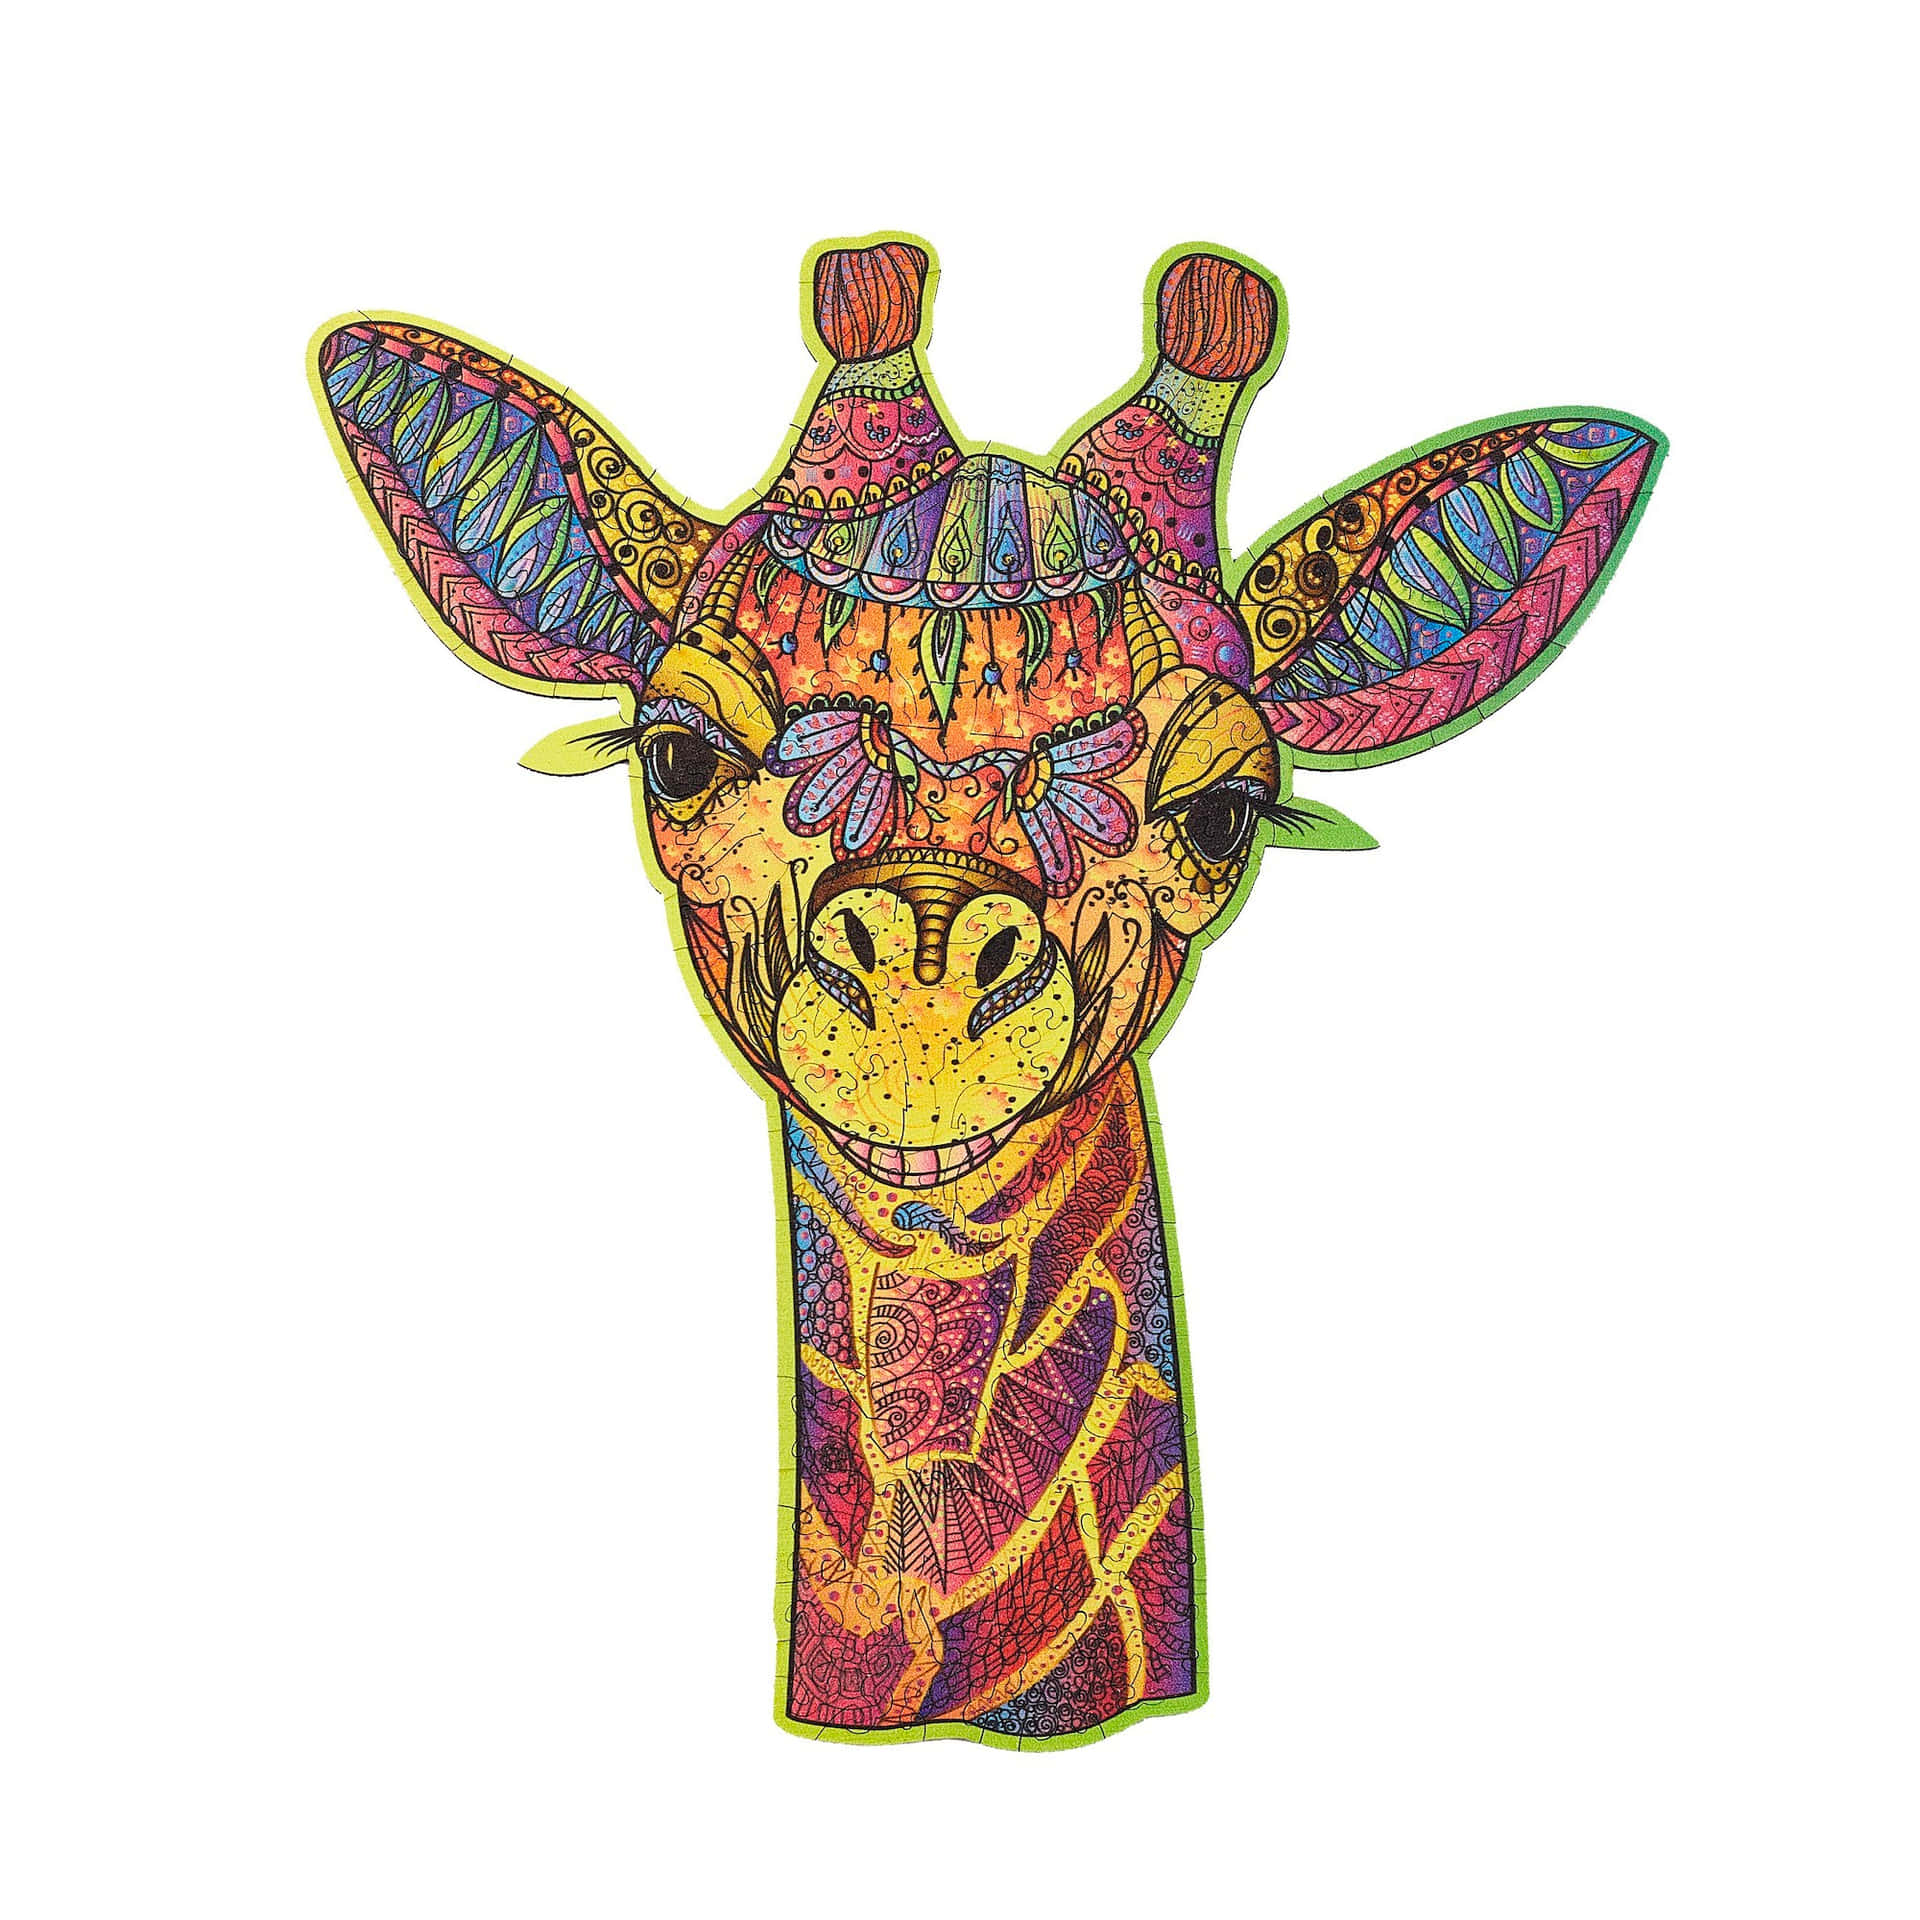 Imagemde Arte Digital Colorida Engraçada De Girafa.